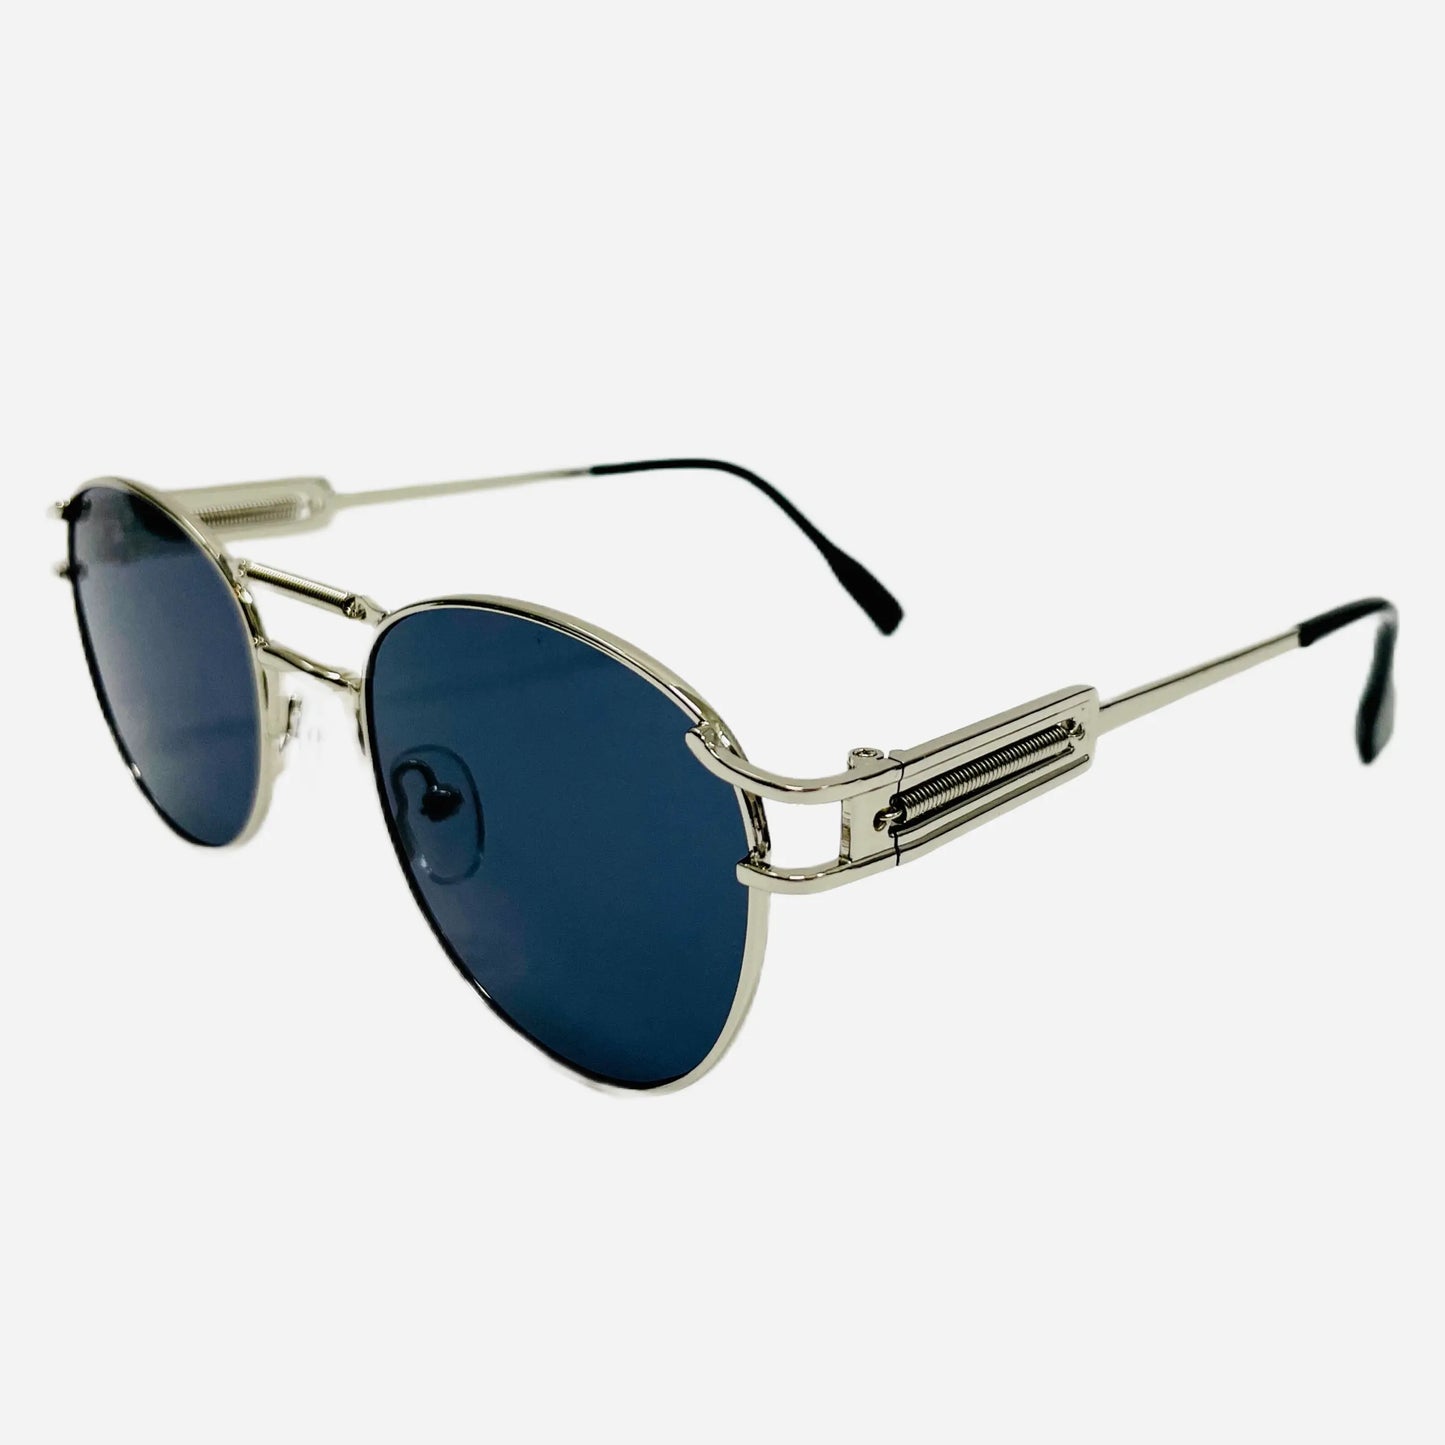 Vintage Jean Paul Gaultier Sonnenbrille Sunglasses Model 56-5107-silver-side